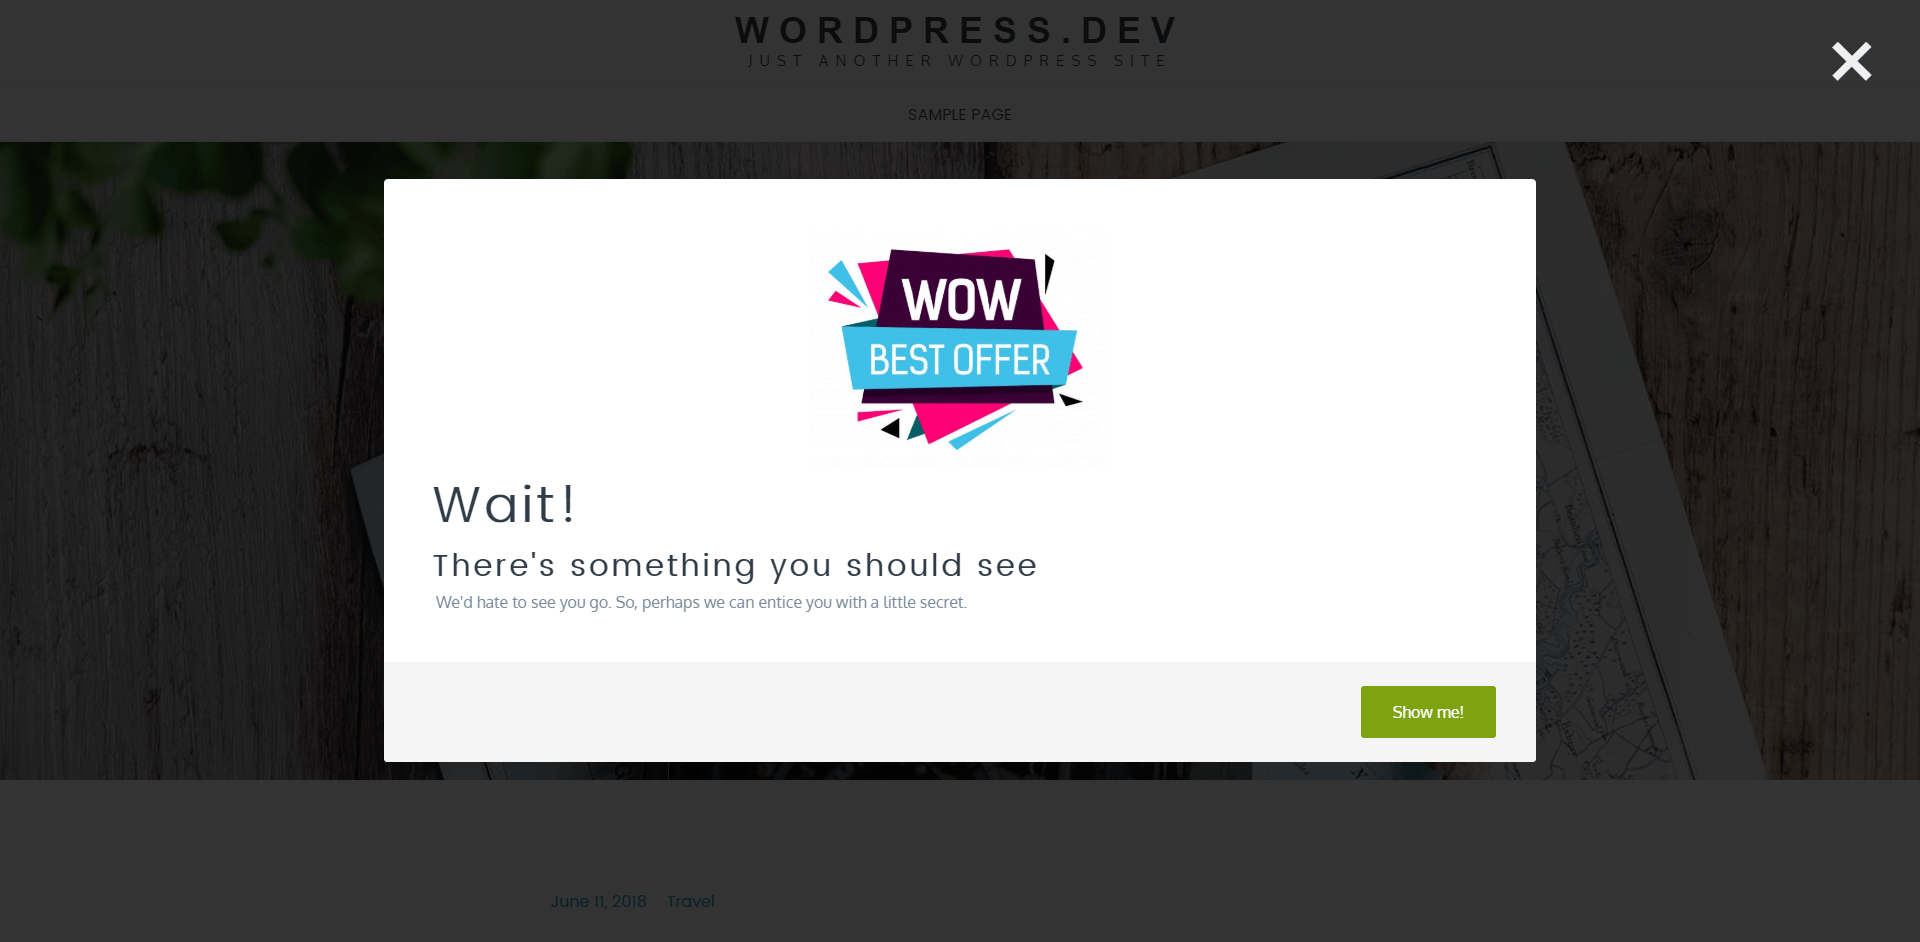 01 exit modal window - WP Exodus: ข้อความทางการตลาดปรากฏขึ้นเมื่อผู้เยี่ยมชมพยายามออกจากเว็บไซต์ของคุณ สร้างเว็บไซต์, ปลั๊กอิน เว็บขายของ, ปลั๊กอิน ร้านค้า, ปลั๊กอิน wordpress, ปลั๊กอิน woocommerce, ทำเว็บไซต์, ซื้อปลั๊กอิน, ซื้อ plugin wordpress, wp plugins, wp plug-in, wp, wordpress plugin, wordpress marketing, wordpress, woocommerce plugin, woocommerce, visitor conversion, ux, prevent site exit, plugin ดีๆ, modal, marketing plugin, exit intent, codecanyon, audible alert, ads